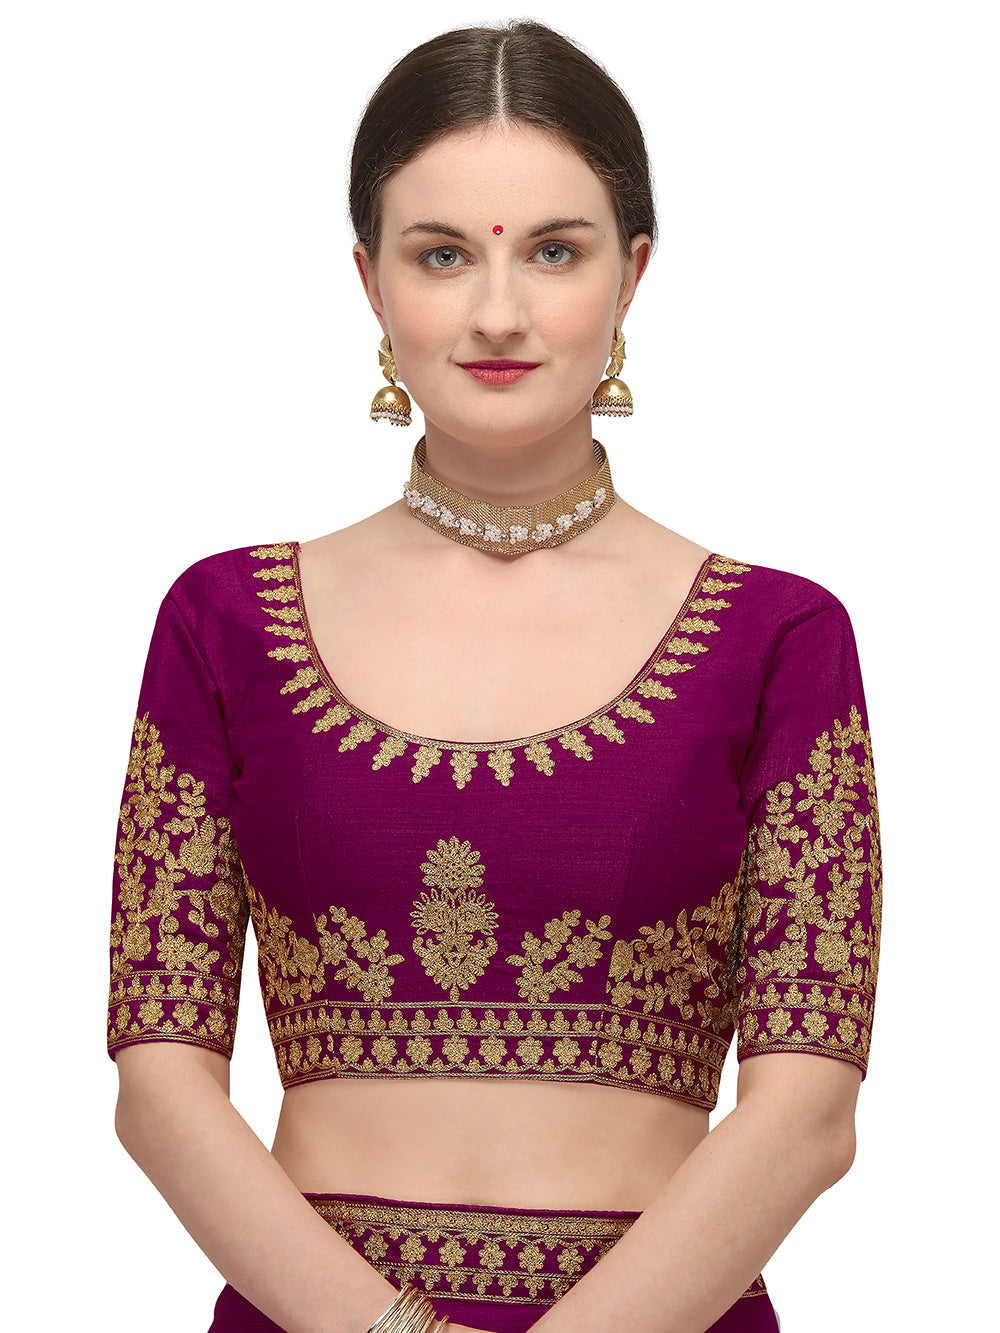 Women's Ahir Embroidery Work Border Wedding Wear Dupion Silk Saree With Blouse Piece (Purple) - NIMIDHYA